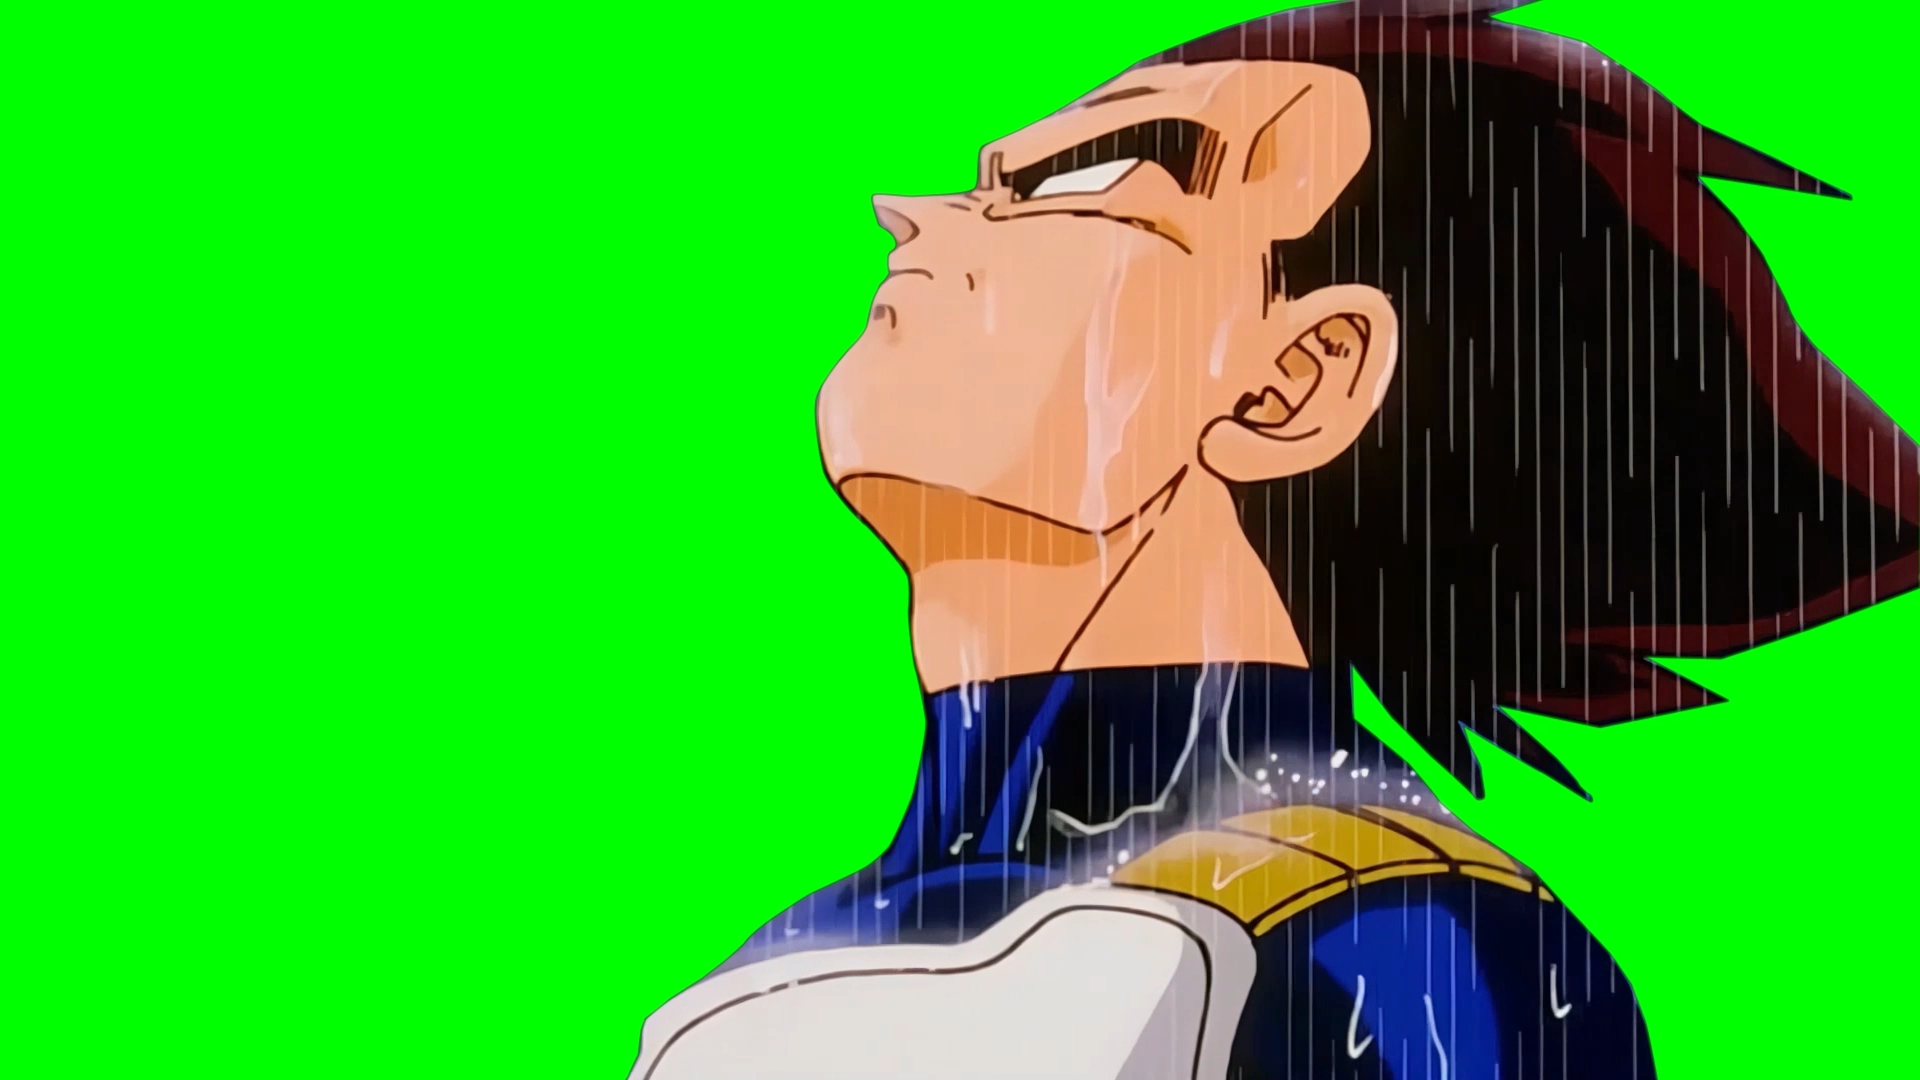 Vegeta standing in the rain - Dragon Ball Z  (Green Screen)